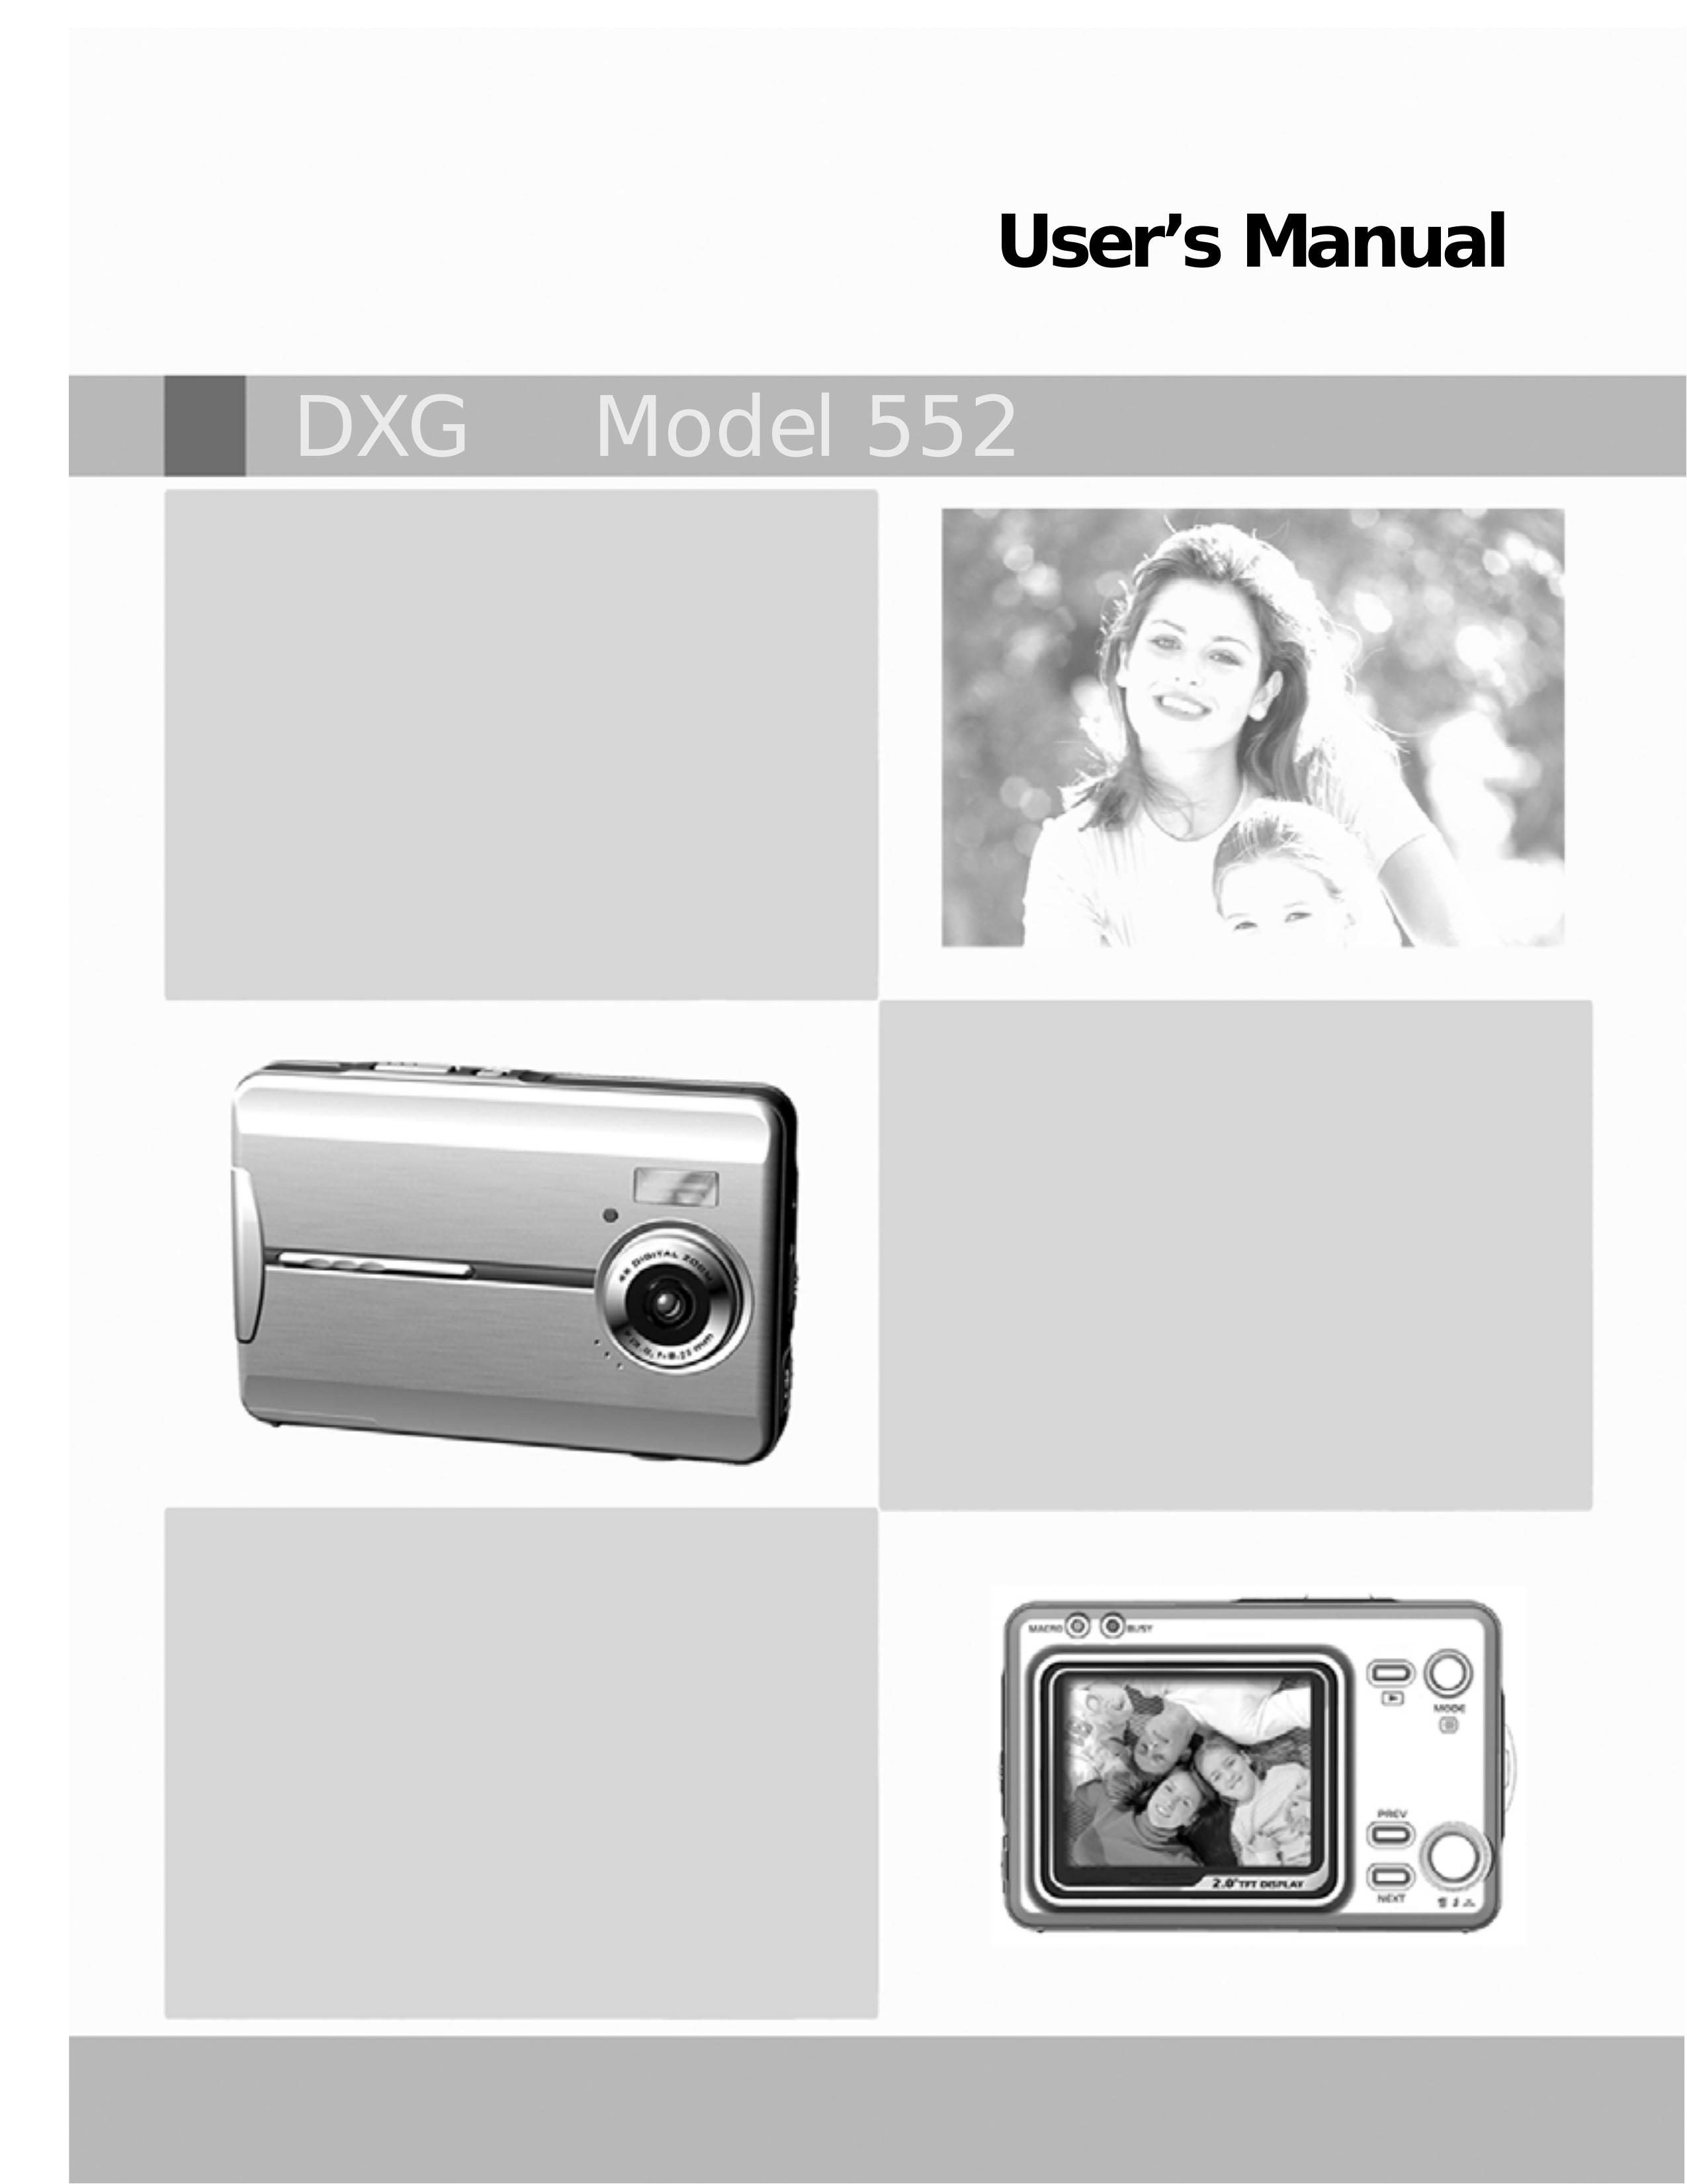 DXG Technology DXG 552 Digital Camera User Manual